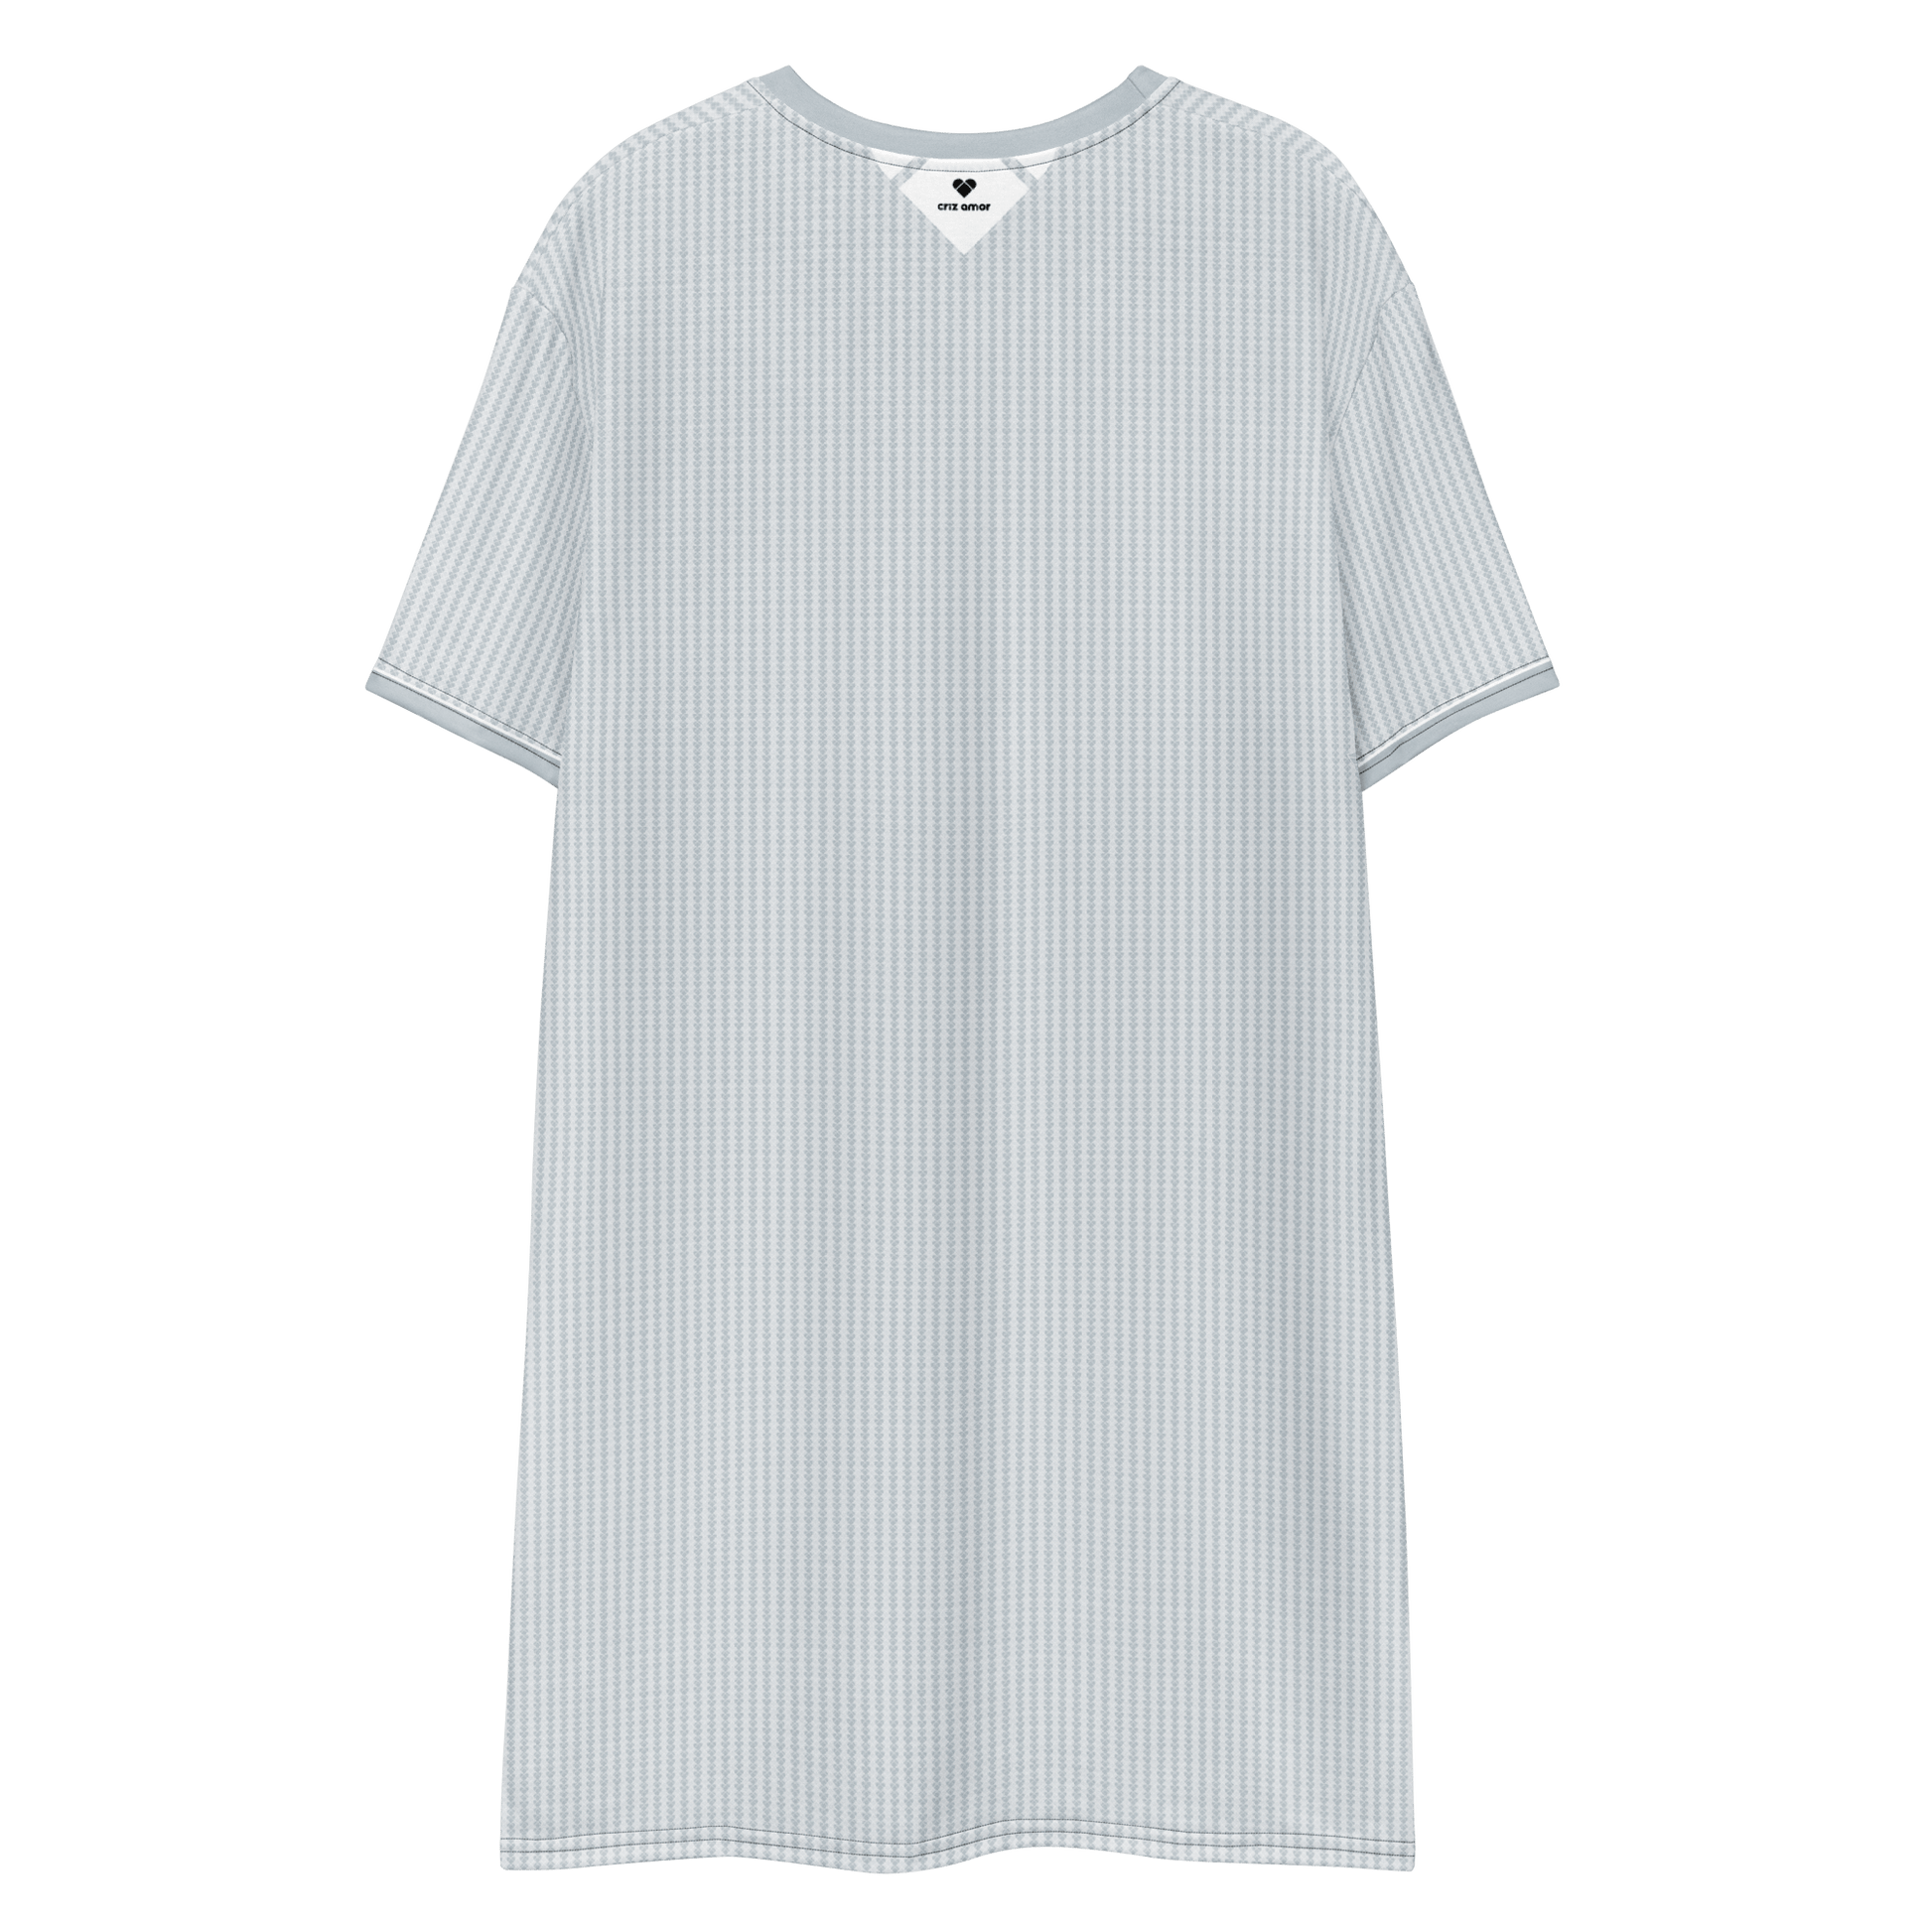 Empowering women's fashion - Lovogram Shirt Dress with geometric heart pattern - CRiZ AMOR - back view product photo